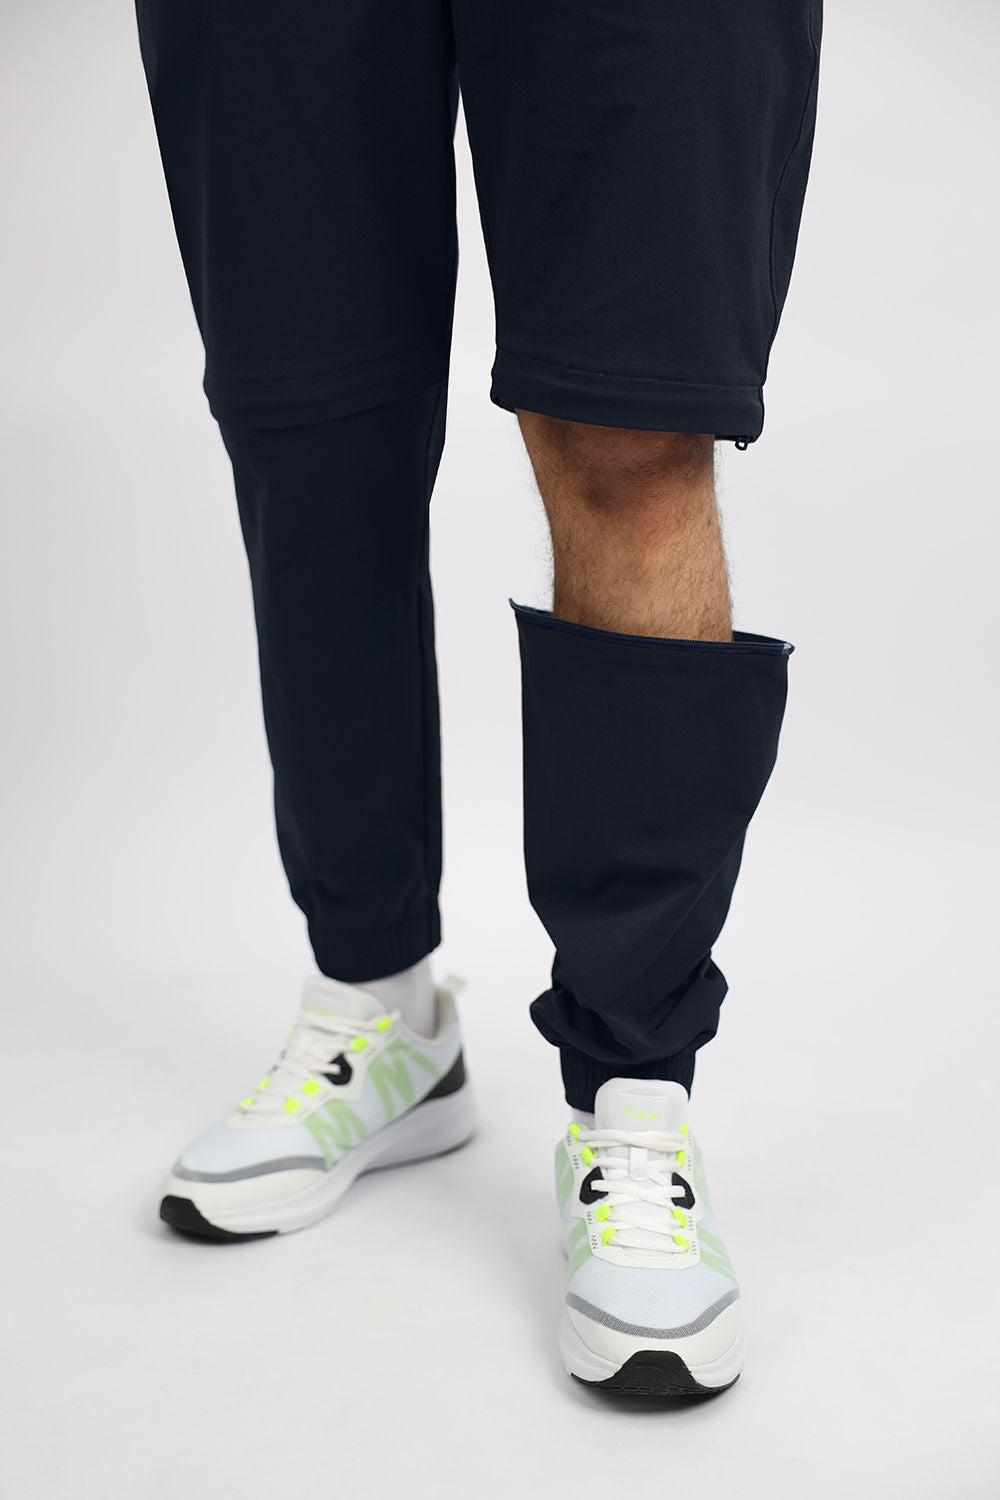 Atum Men's Adjustable Pants/Shorts - Atum Egypt #